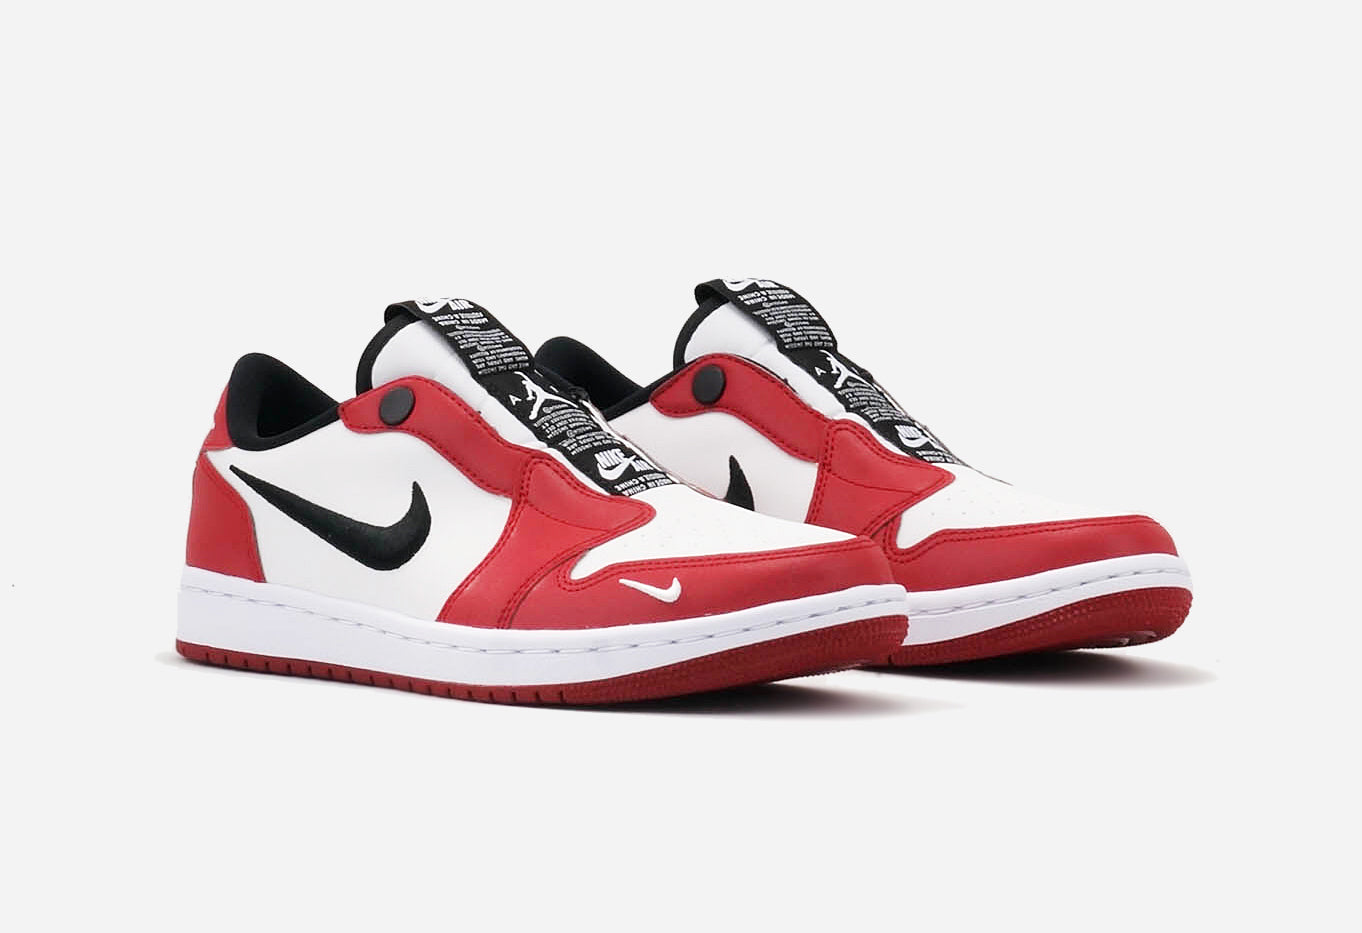 SNEAKER RELEASES | Nike Air Jordan 1 Low Slip Chicago | March 1